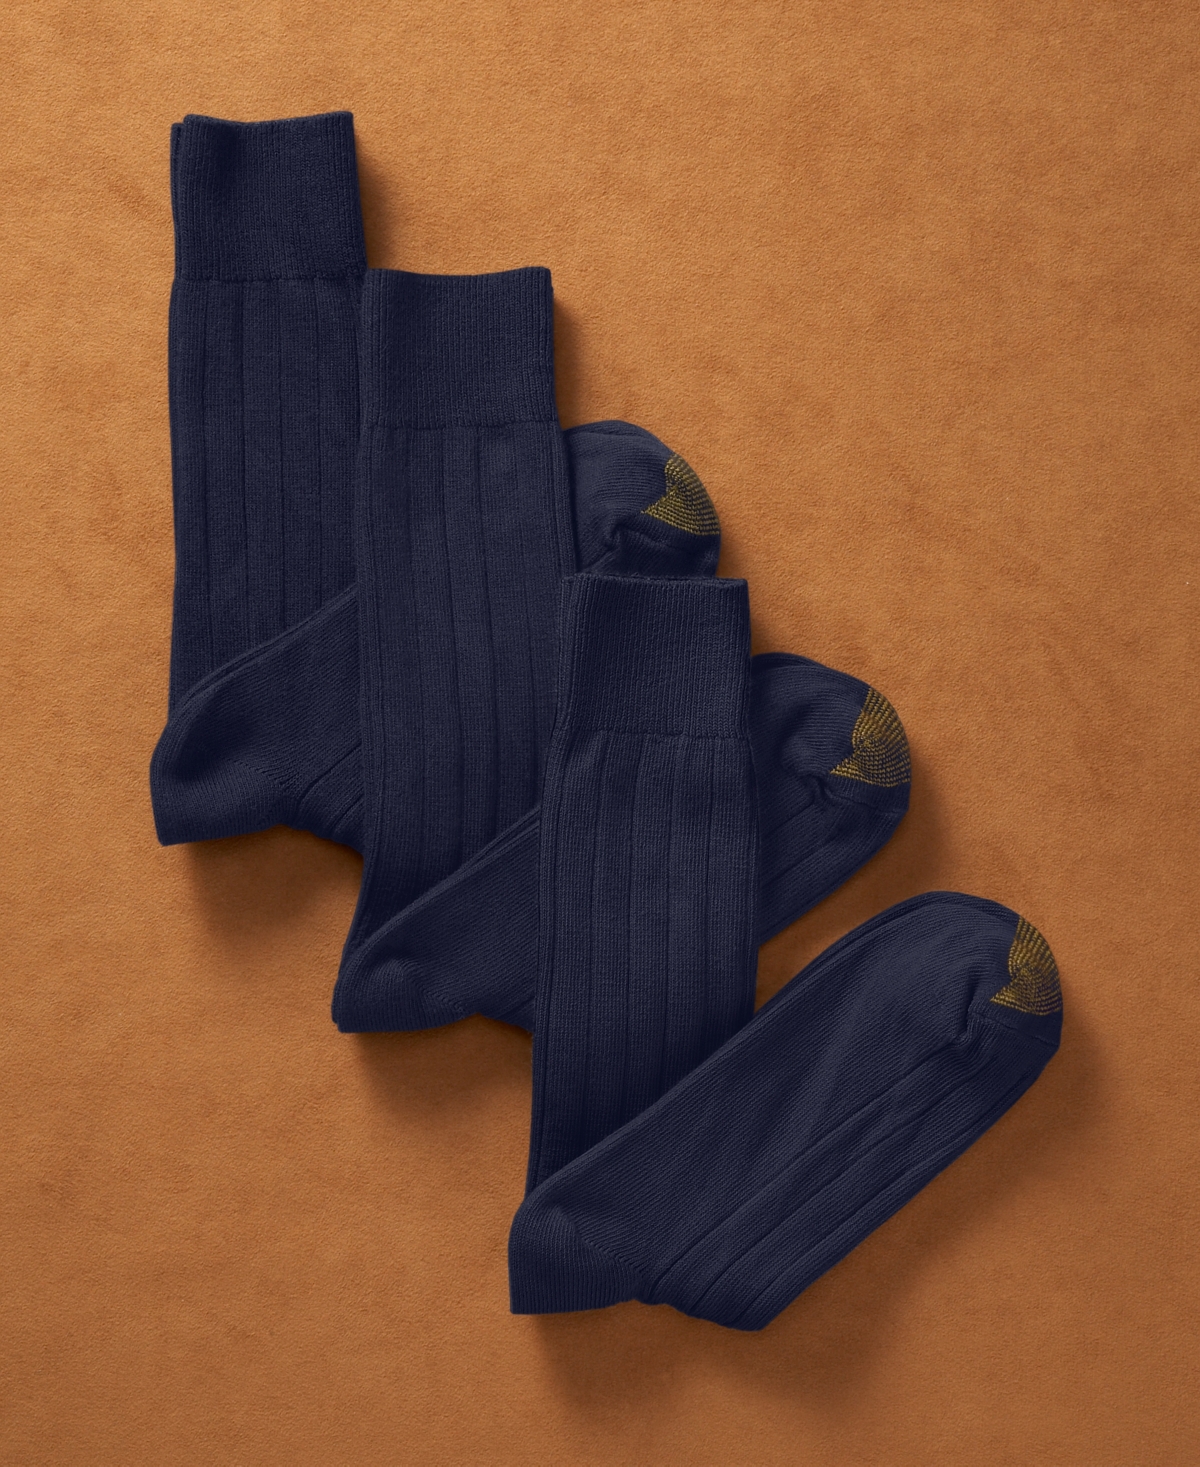 Gold Toe Men's 3-Pack Dress Hamption Crew Socks